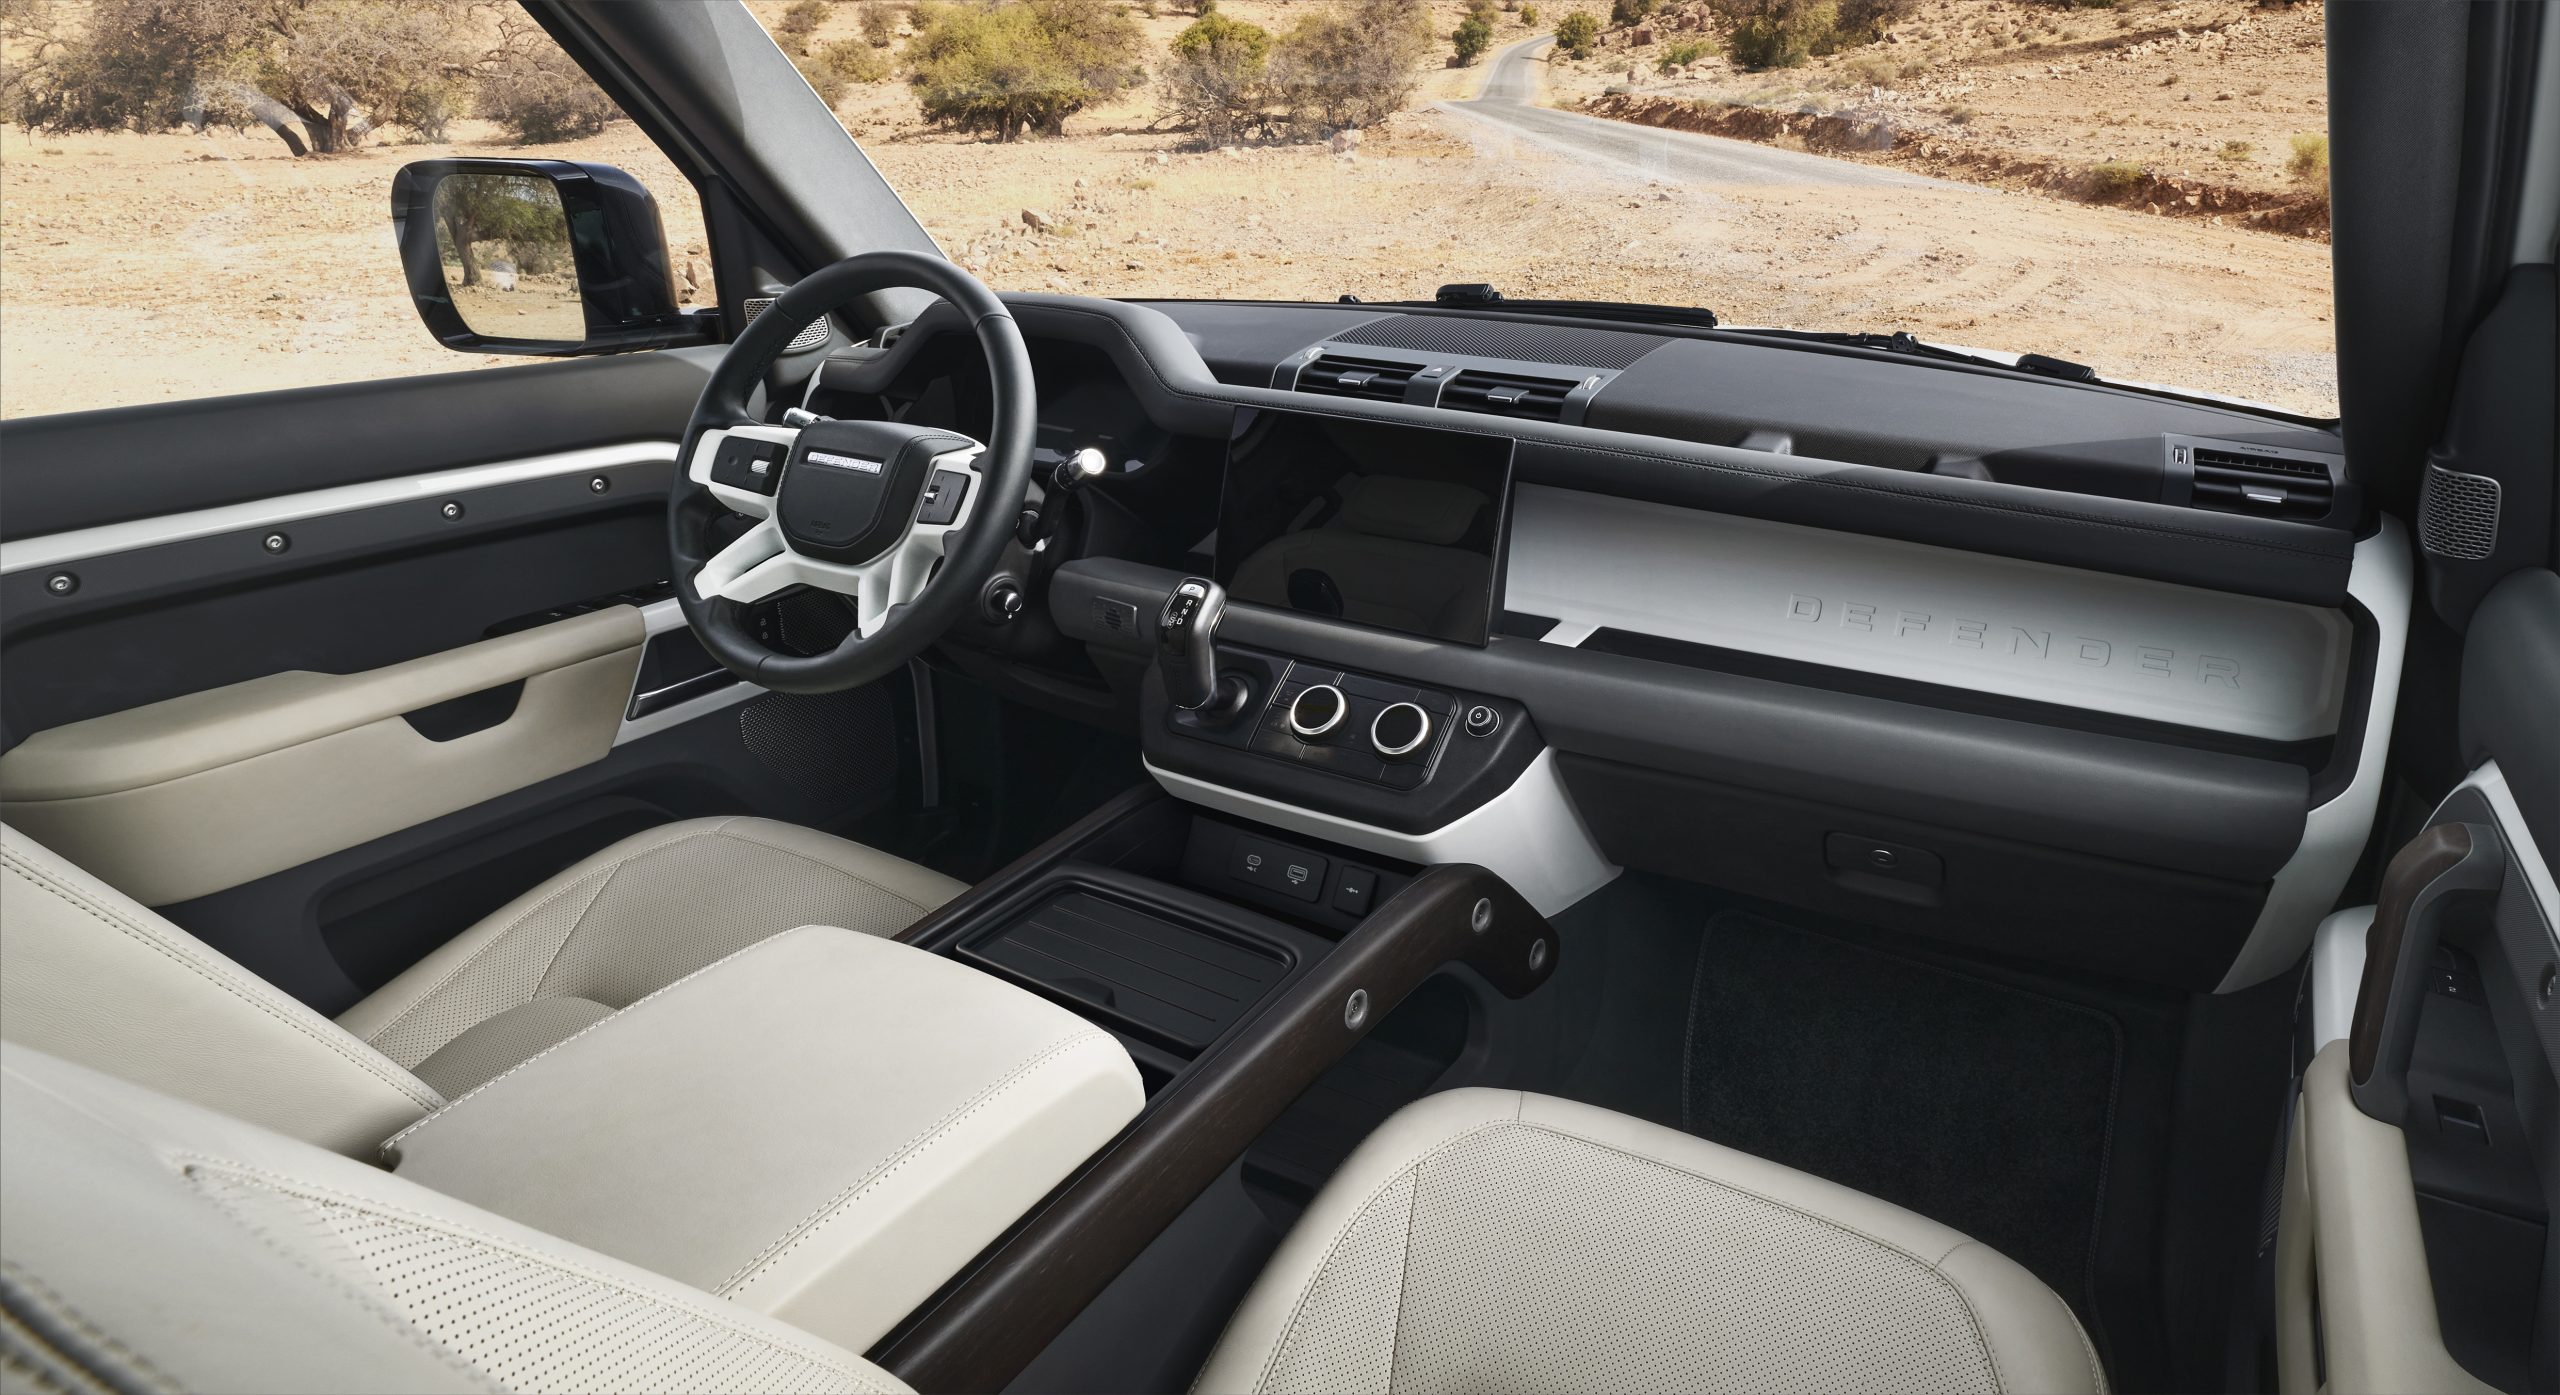 Land Rover Defender 130 interior0522